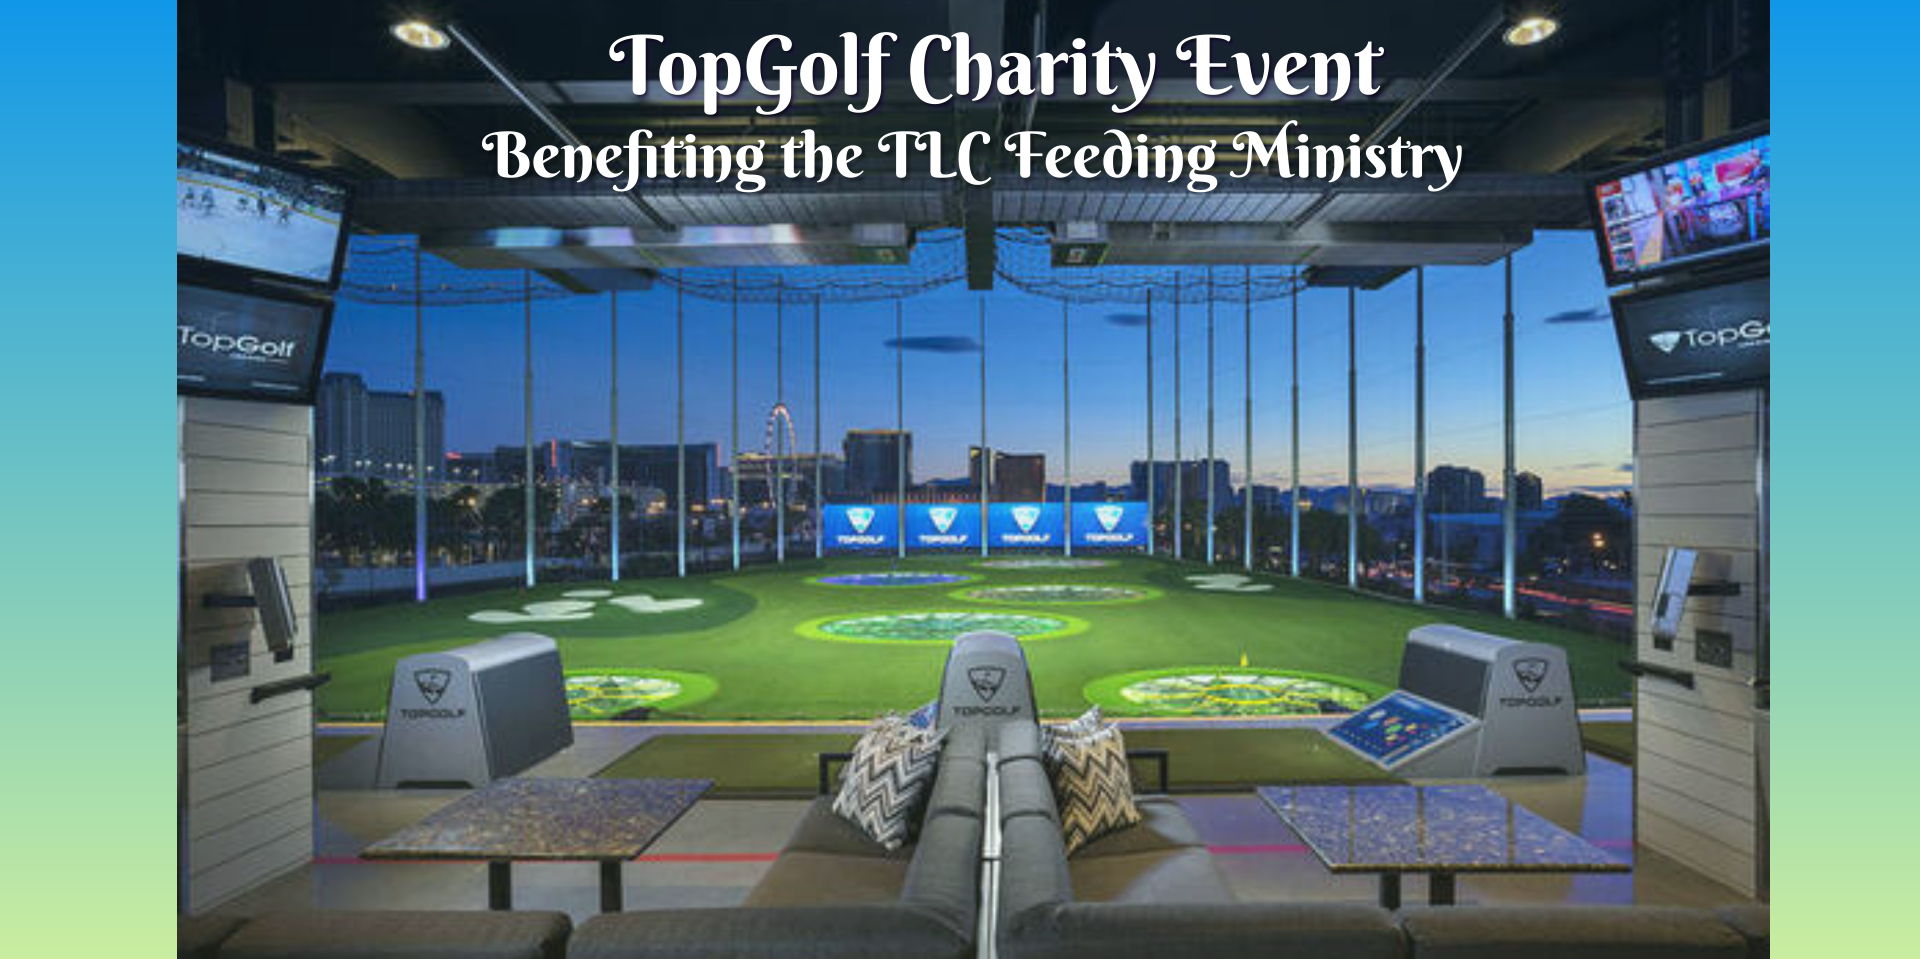 Topgolf Fundraiser promotional image